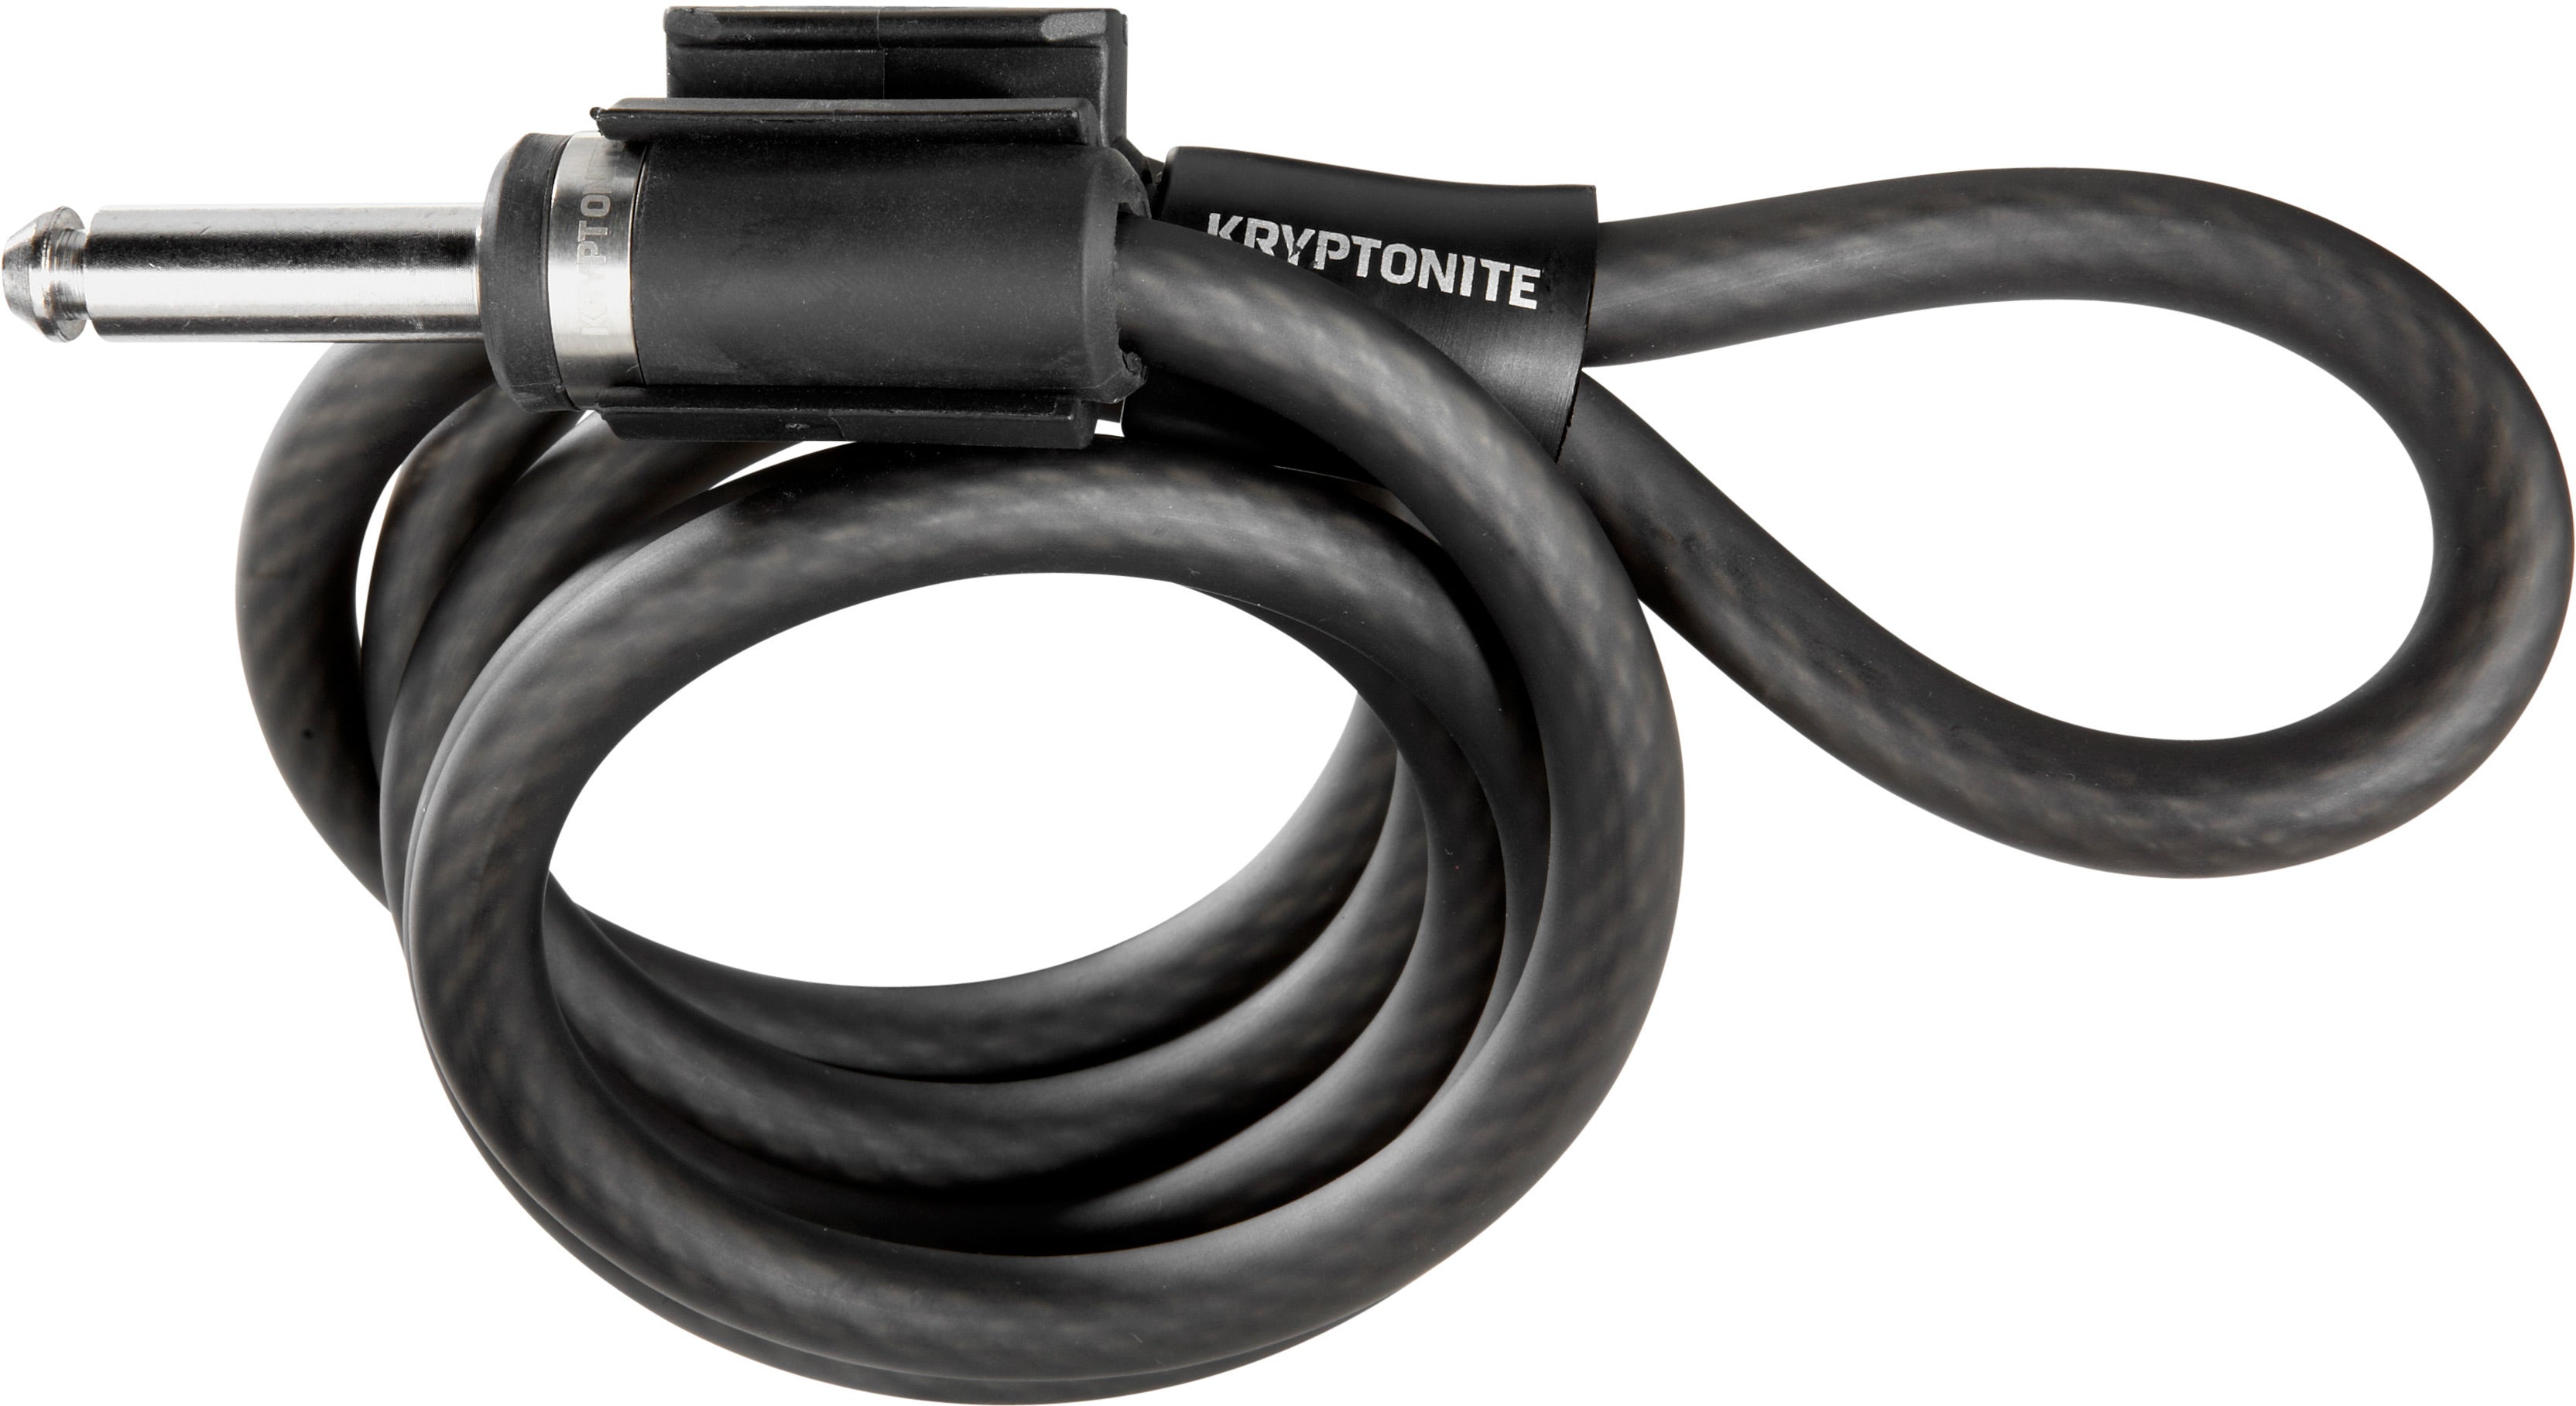 Kryptonite 10mm 120cm Bike Cable Lock